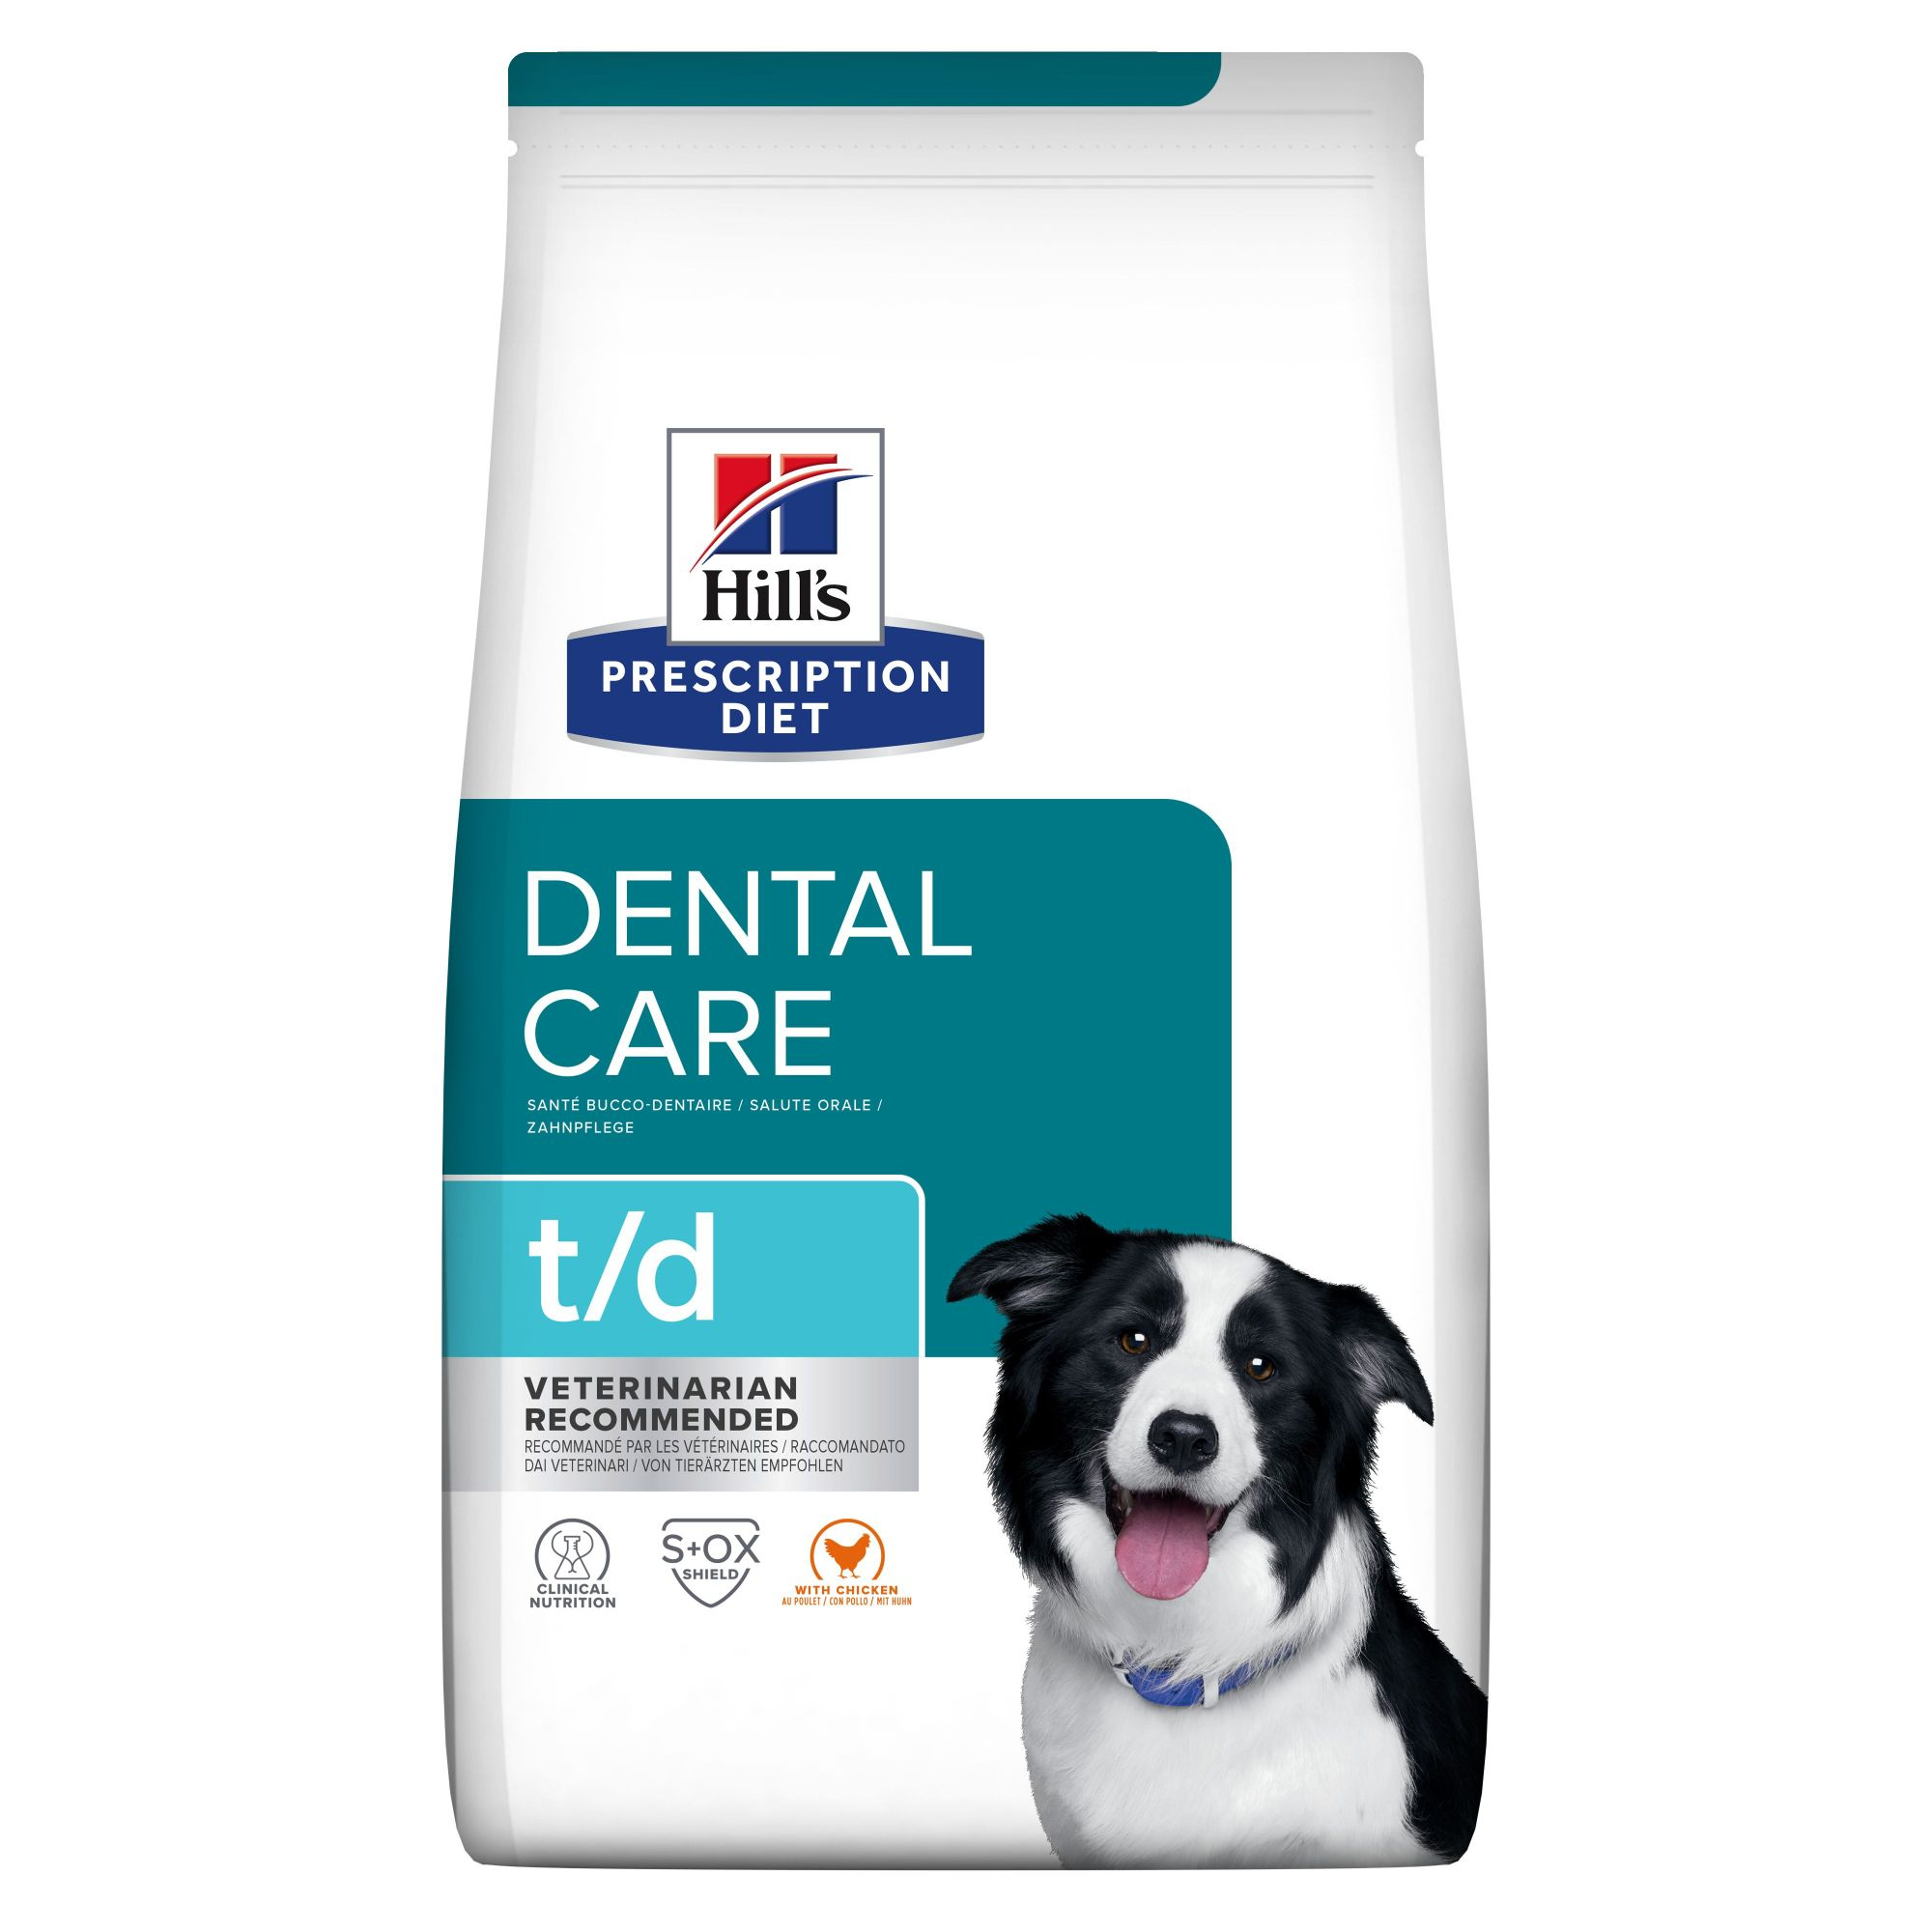 HILL'S Prescription Diet T/D Dental Care für erwachsene Hunde